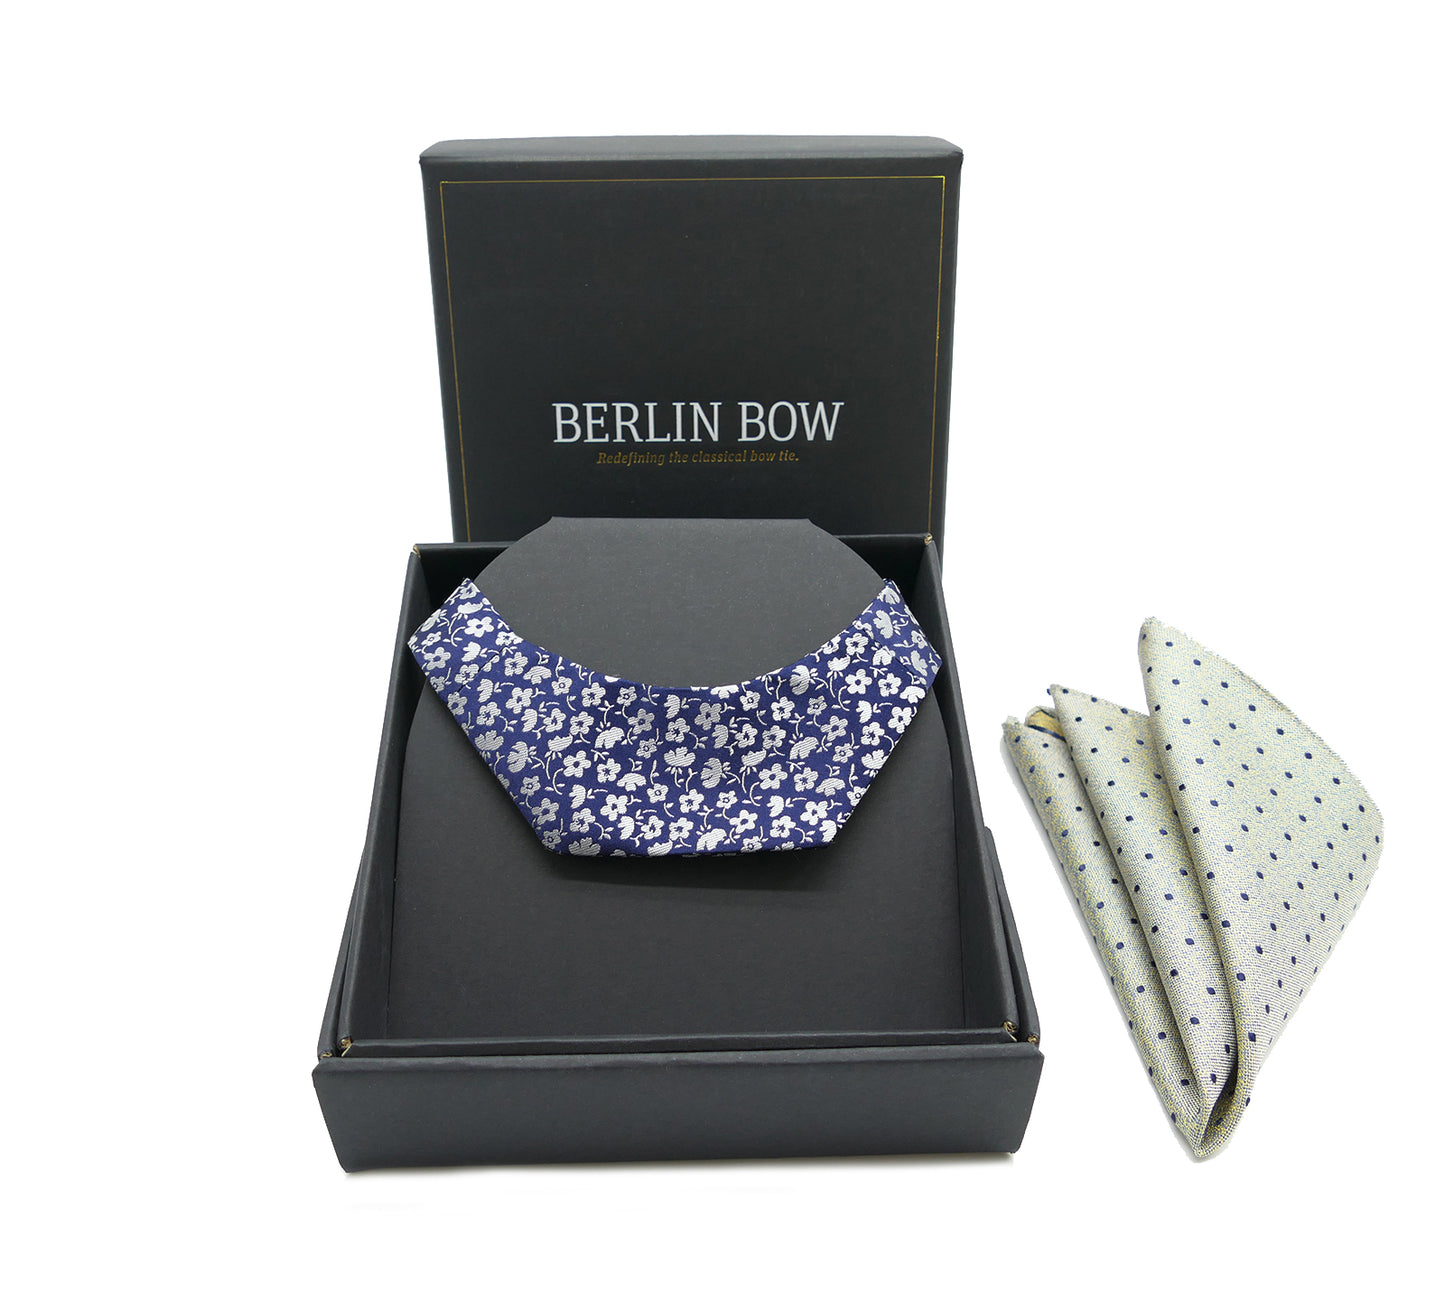 BERLIN BOW No. II design: pirlo flower